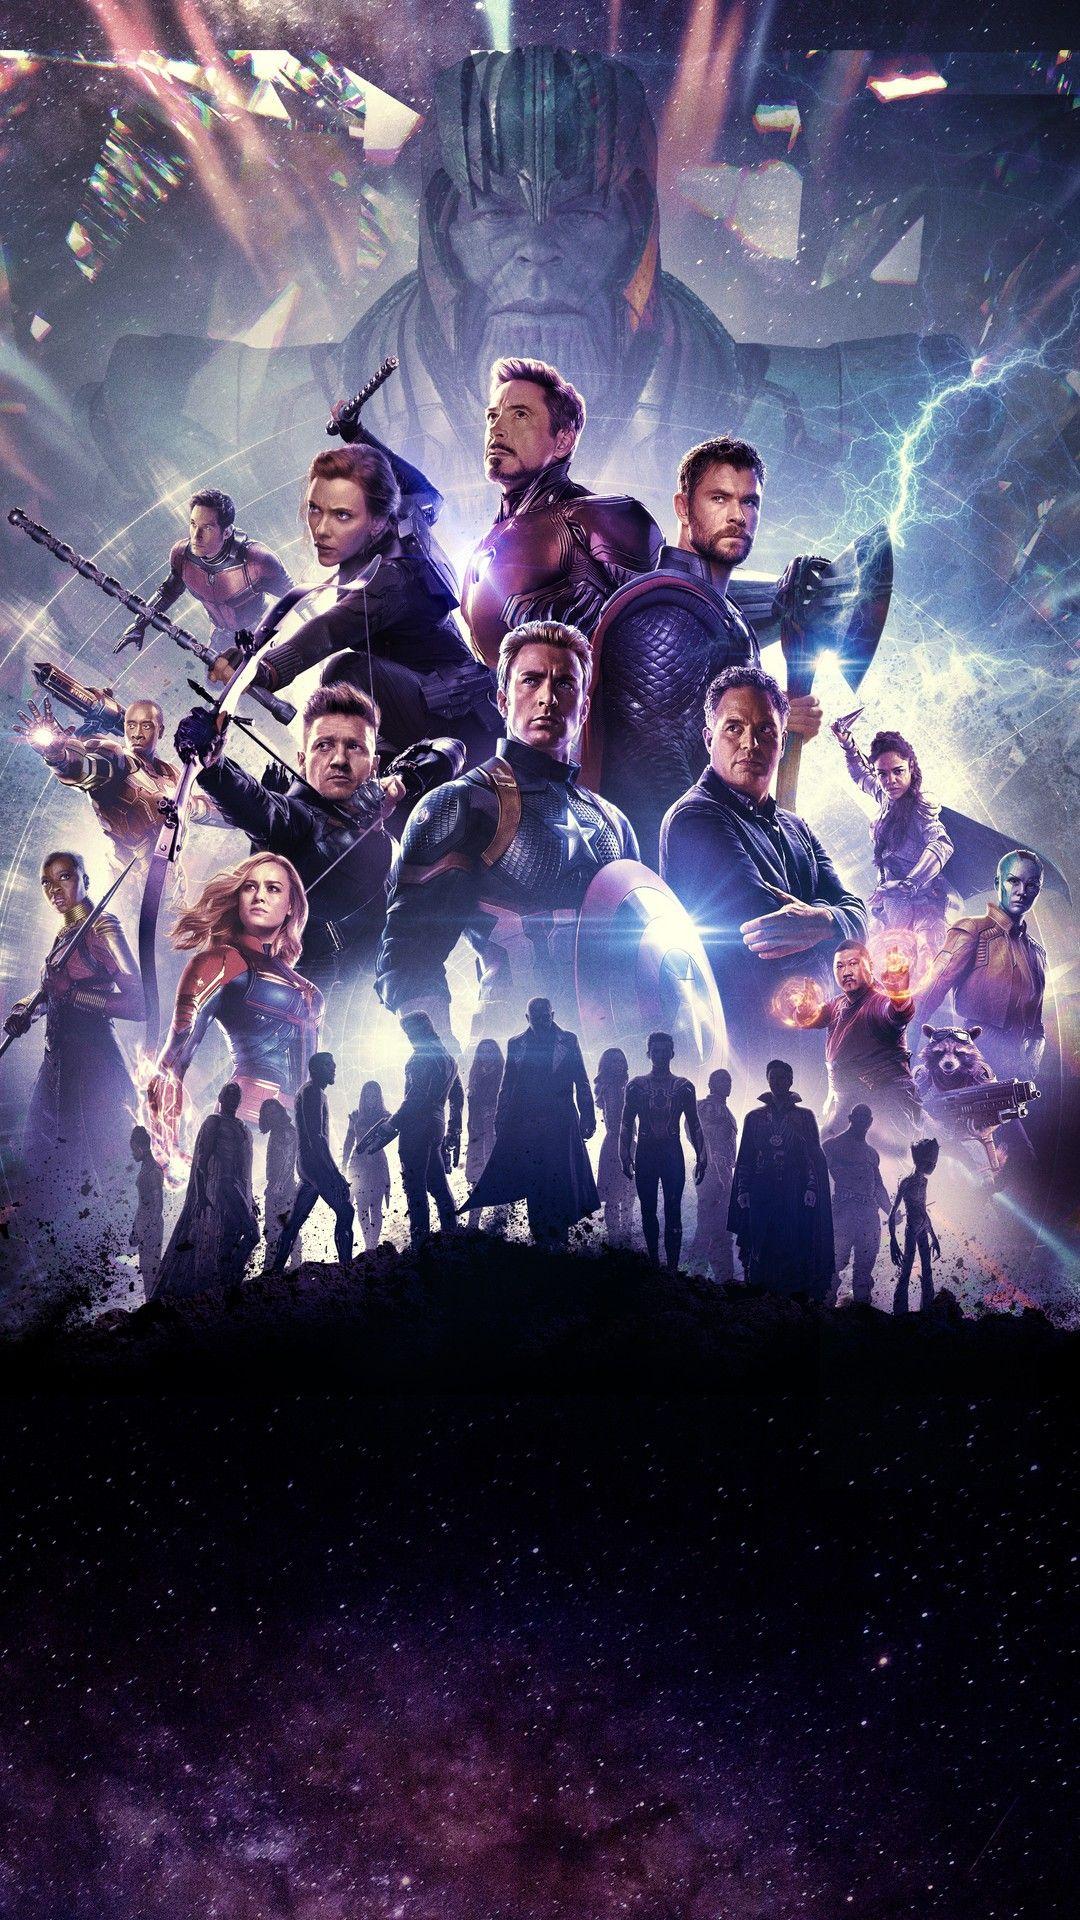 Avengers Endgame 2019 Android Wallpaper Movie Poster Wallpaper HD. Marvel background, Marvel superheroes, Marvel posters